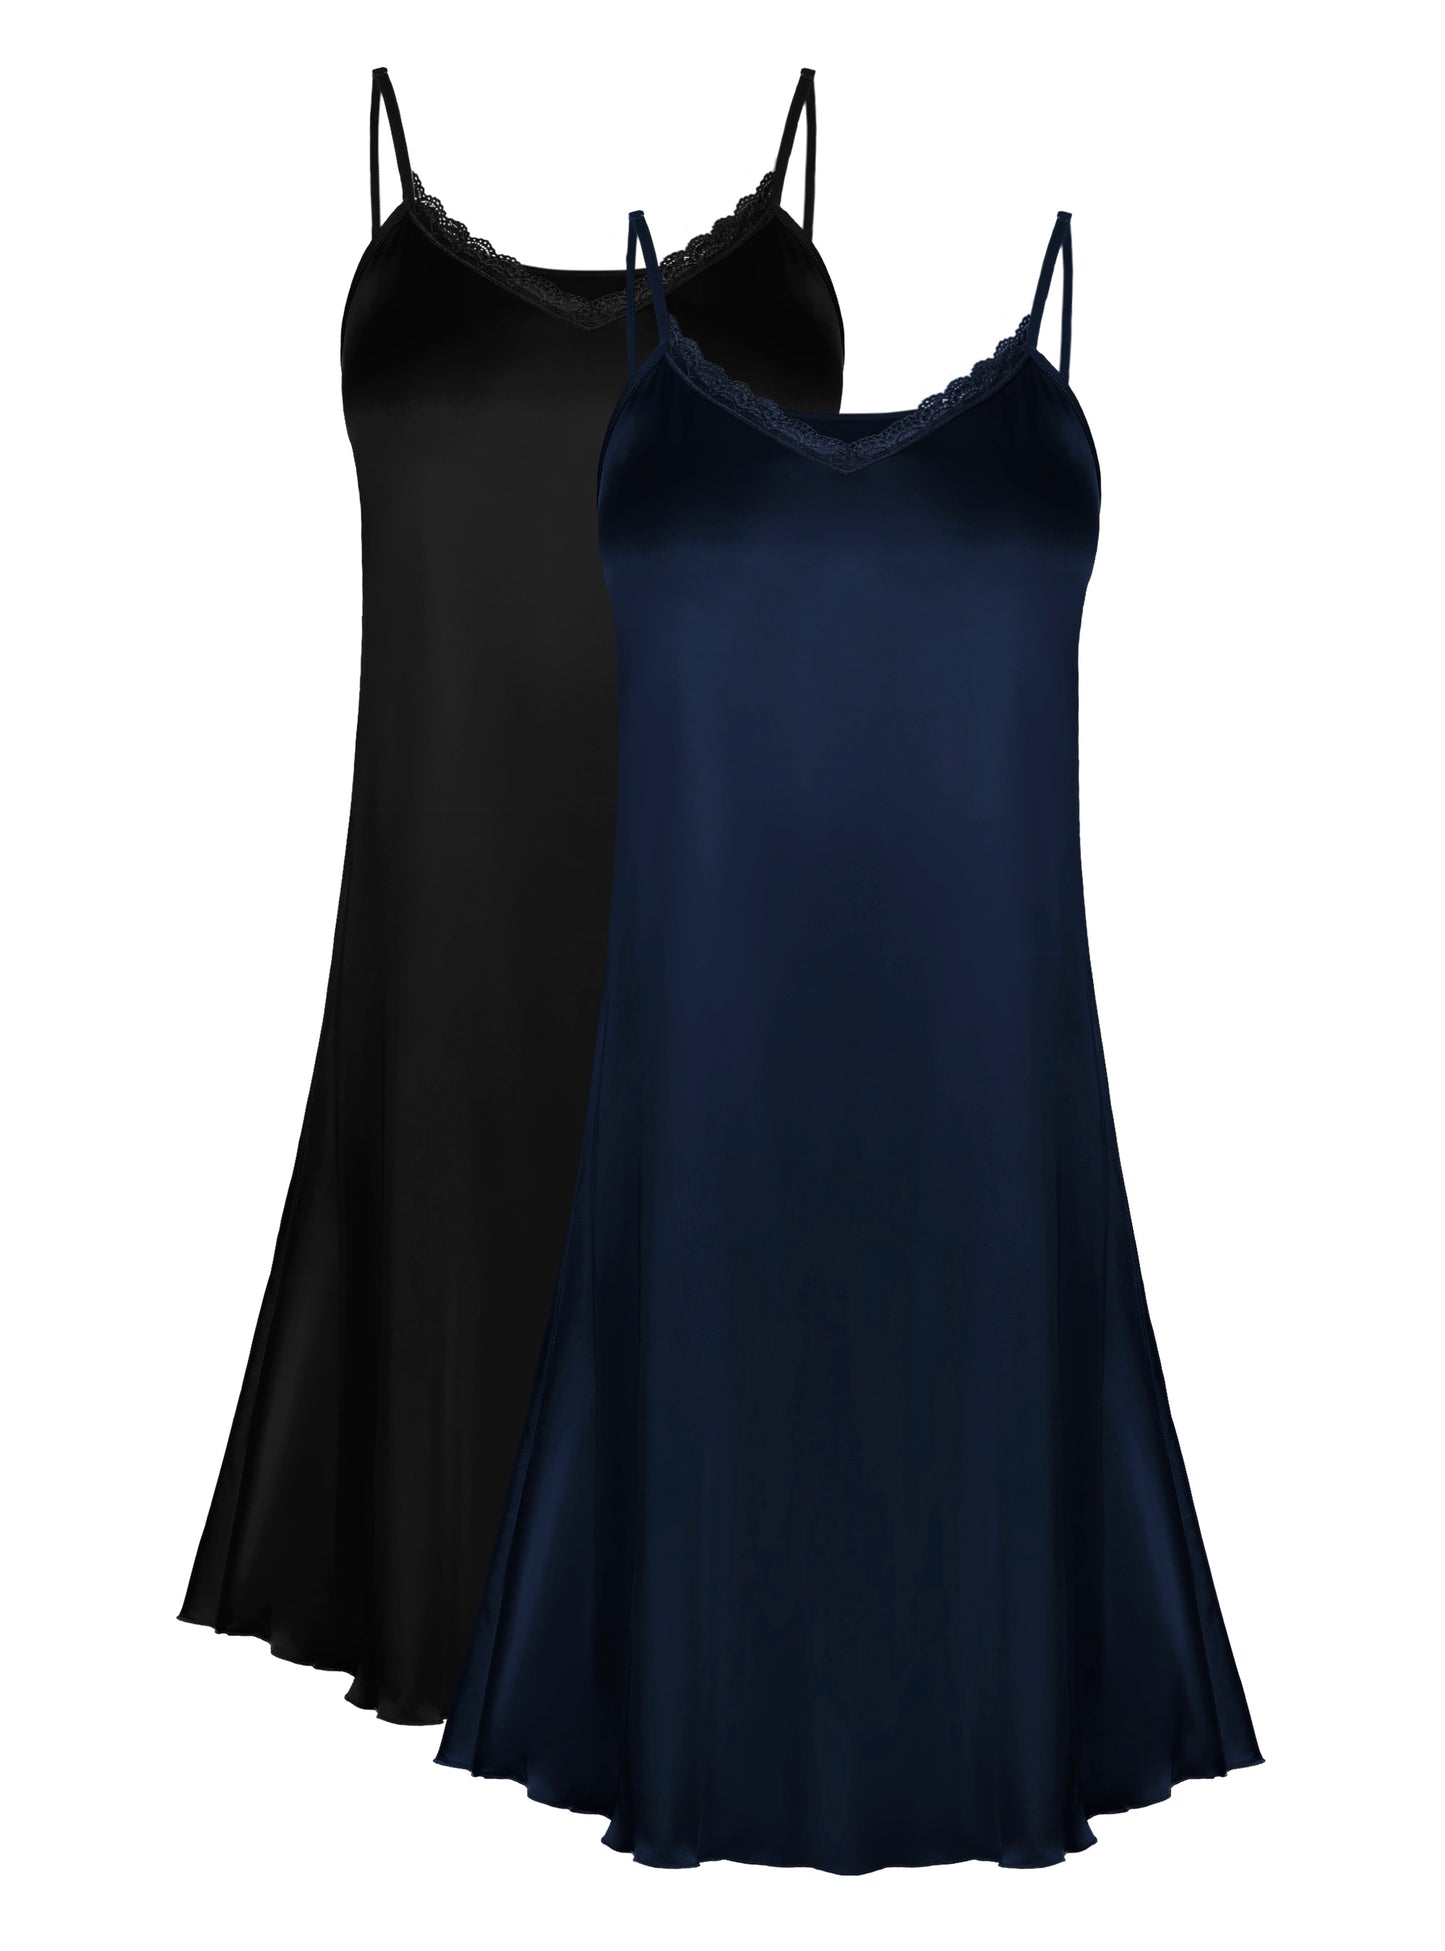 Nightgowns for Women Satin Sleep Dress 2 Packs